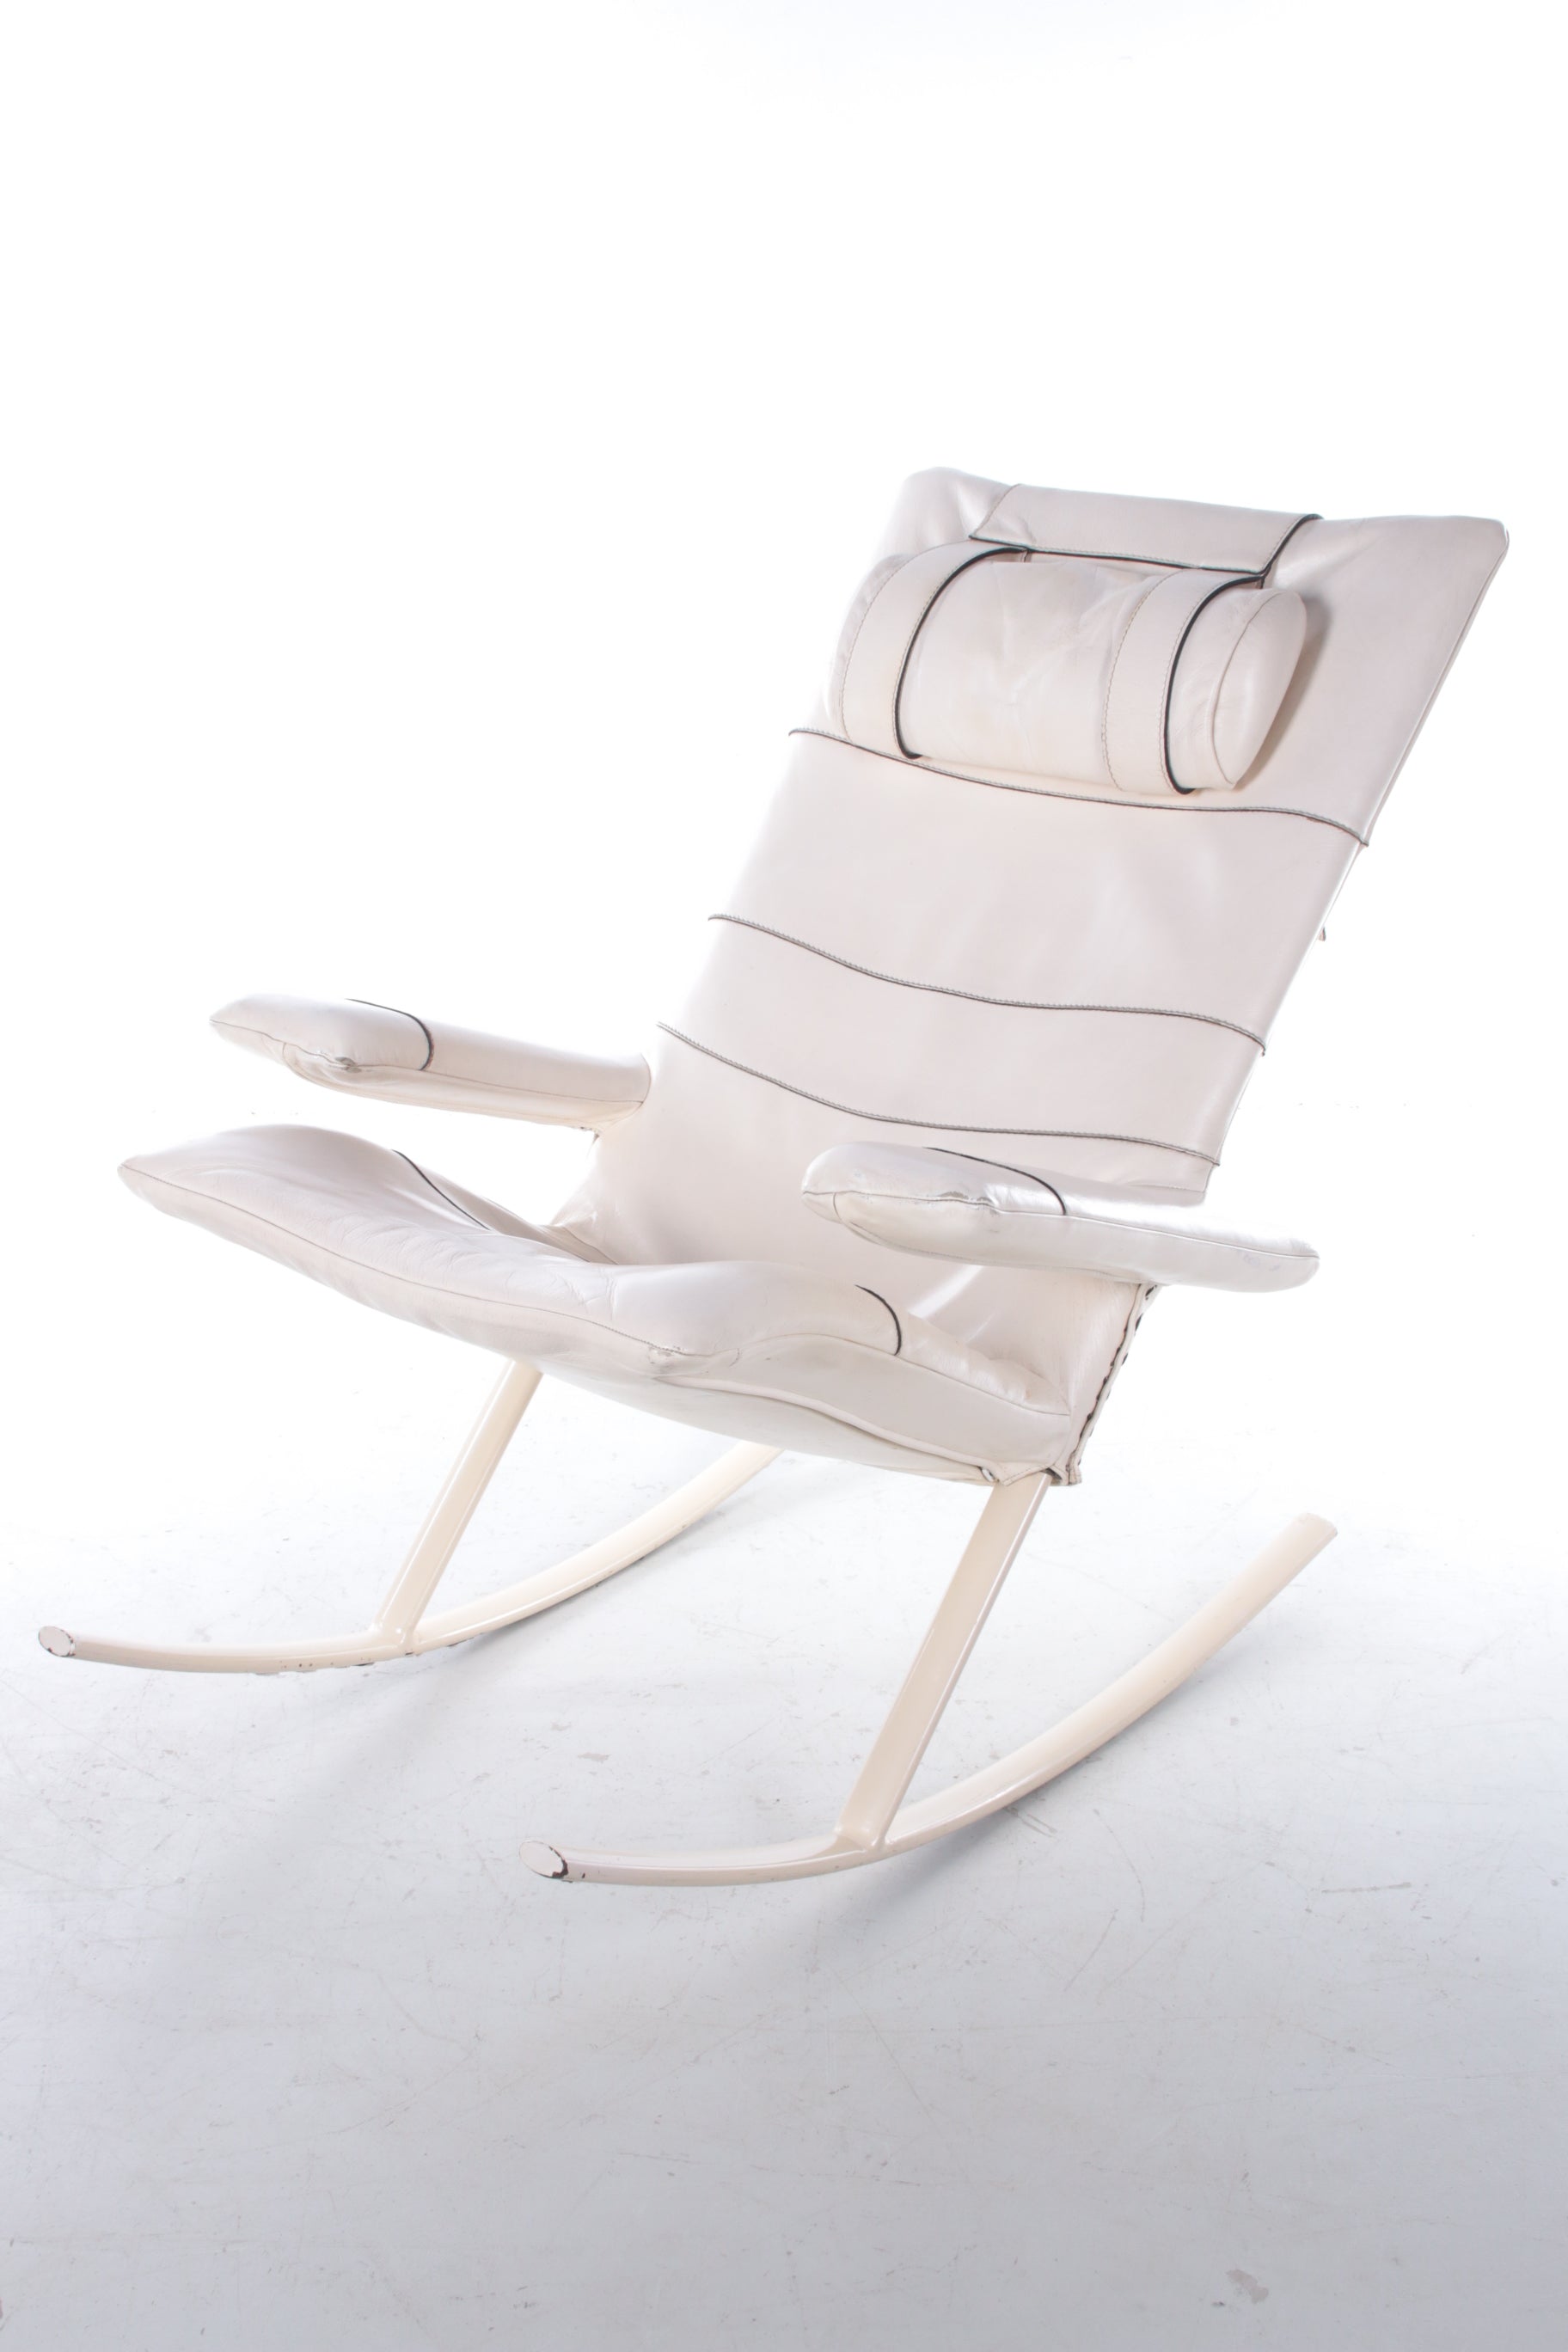 ontsmettingsmiddel amplitude Verlichten White leather rocking chair Design by Jori,Belgium 1960s – Timeless-Art